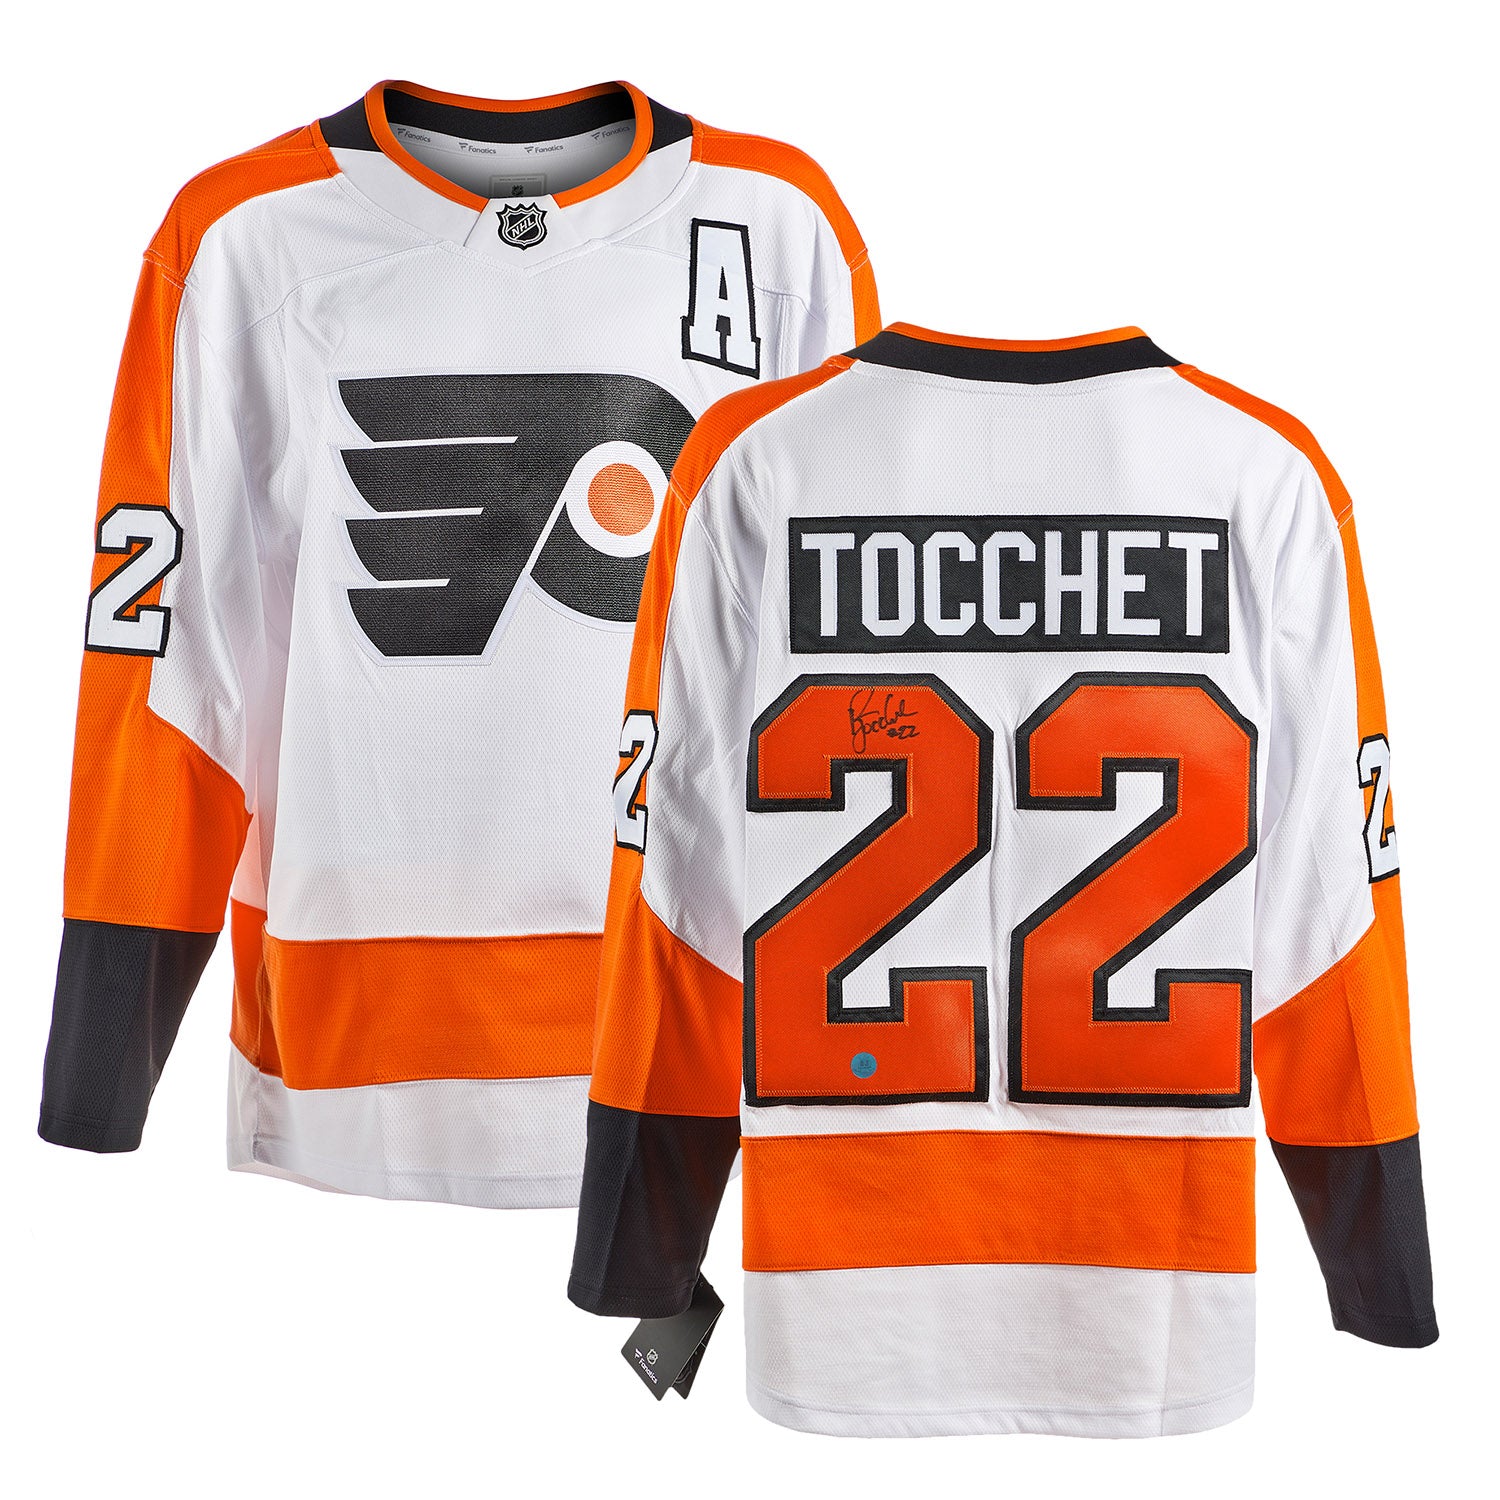 Rick Tocchet Philadelphia Flyers Autographed Fanatics Jersey